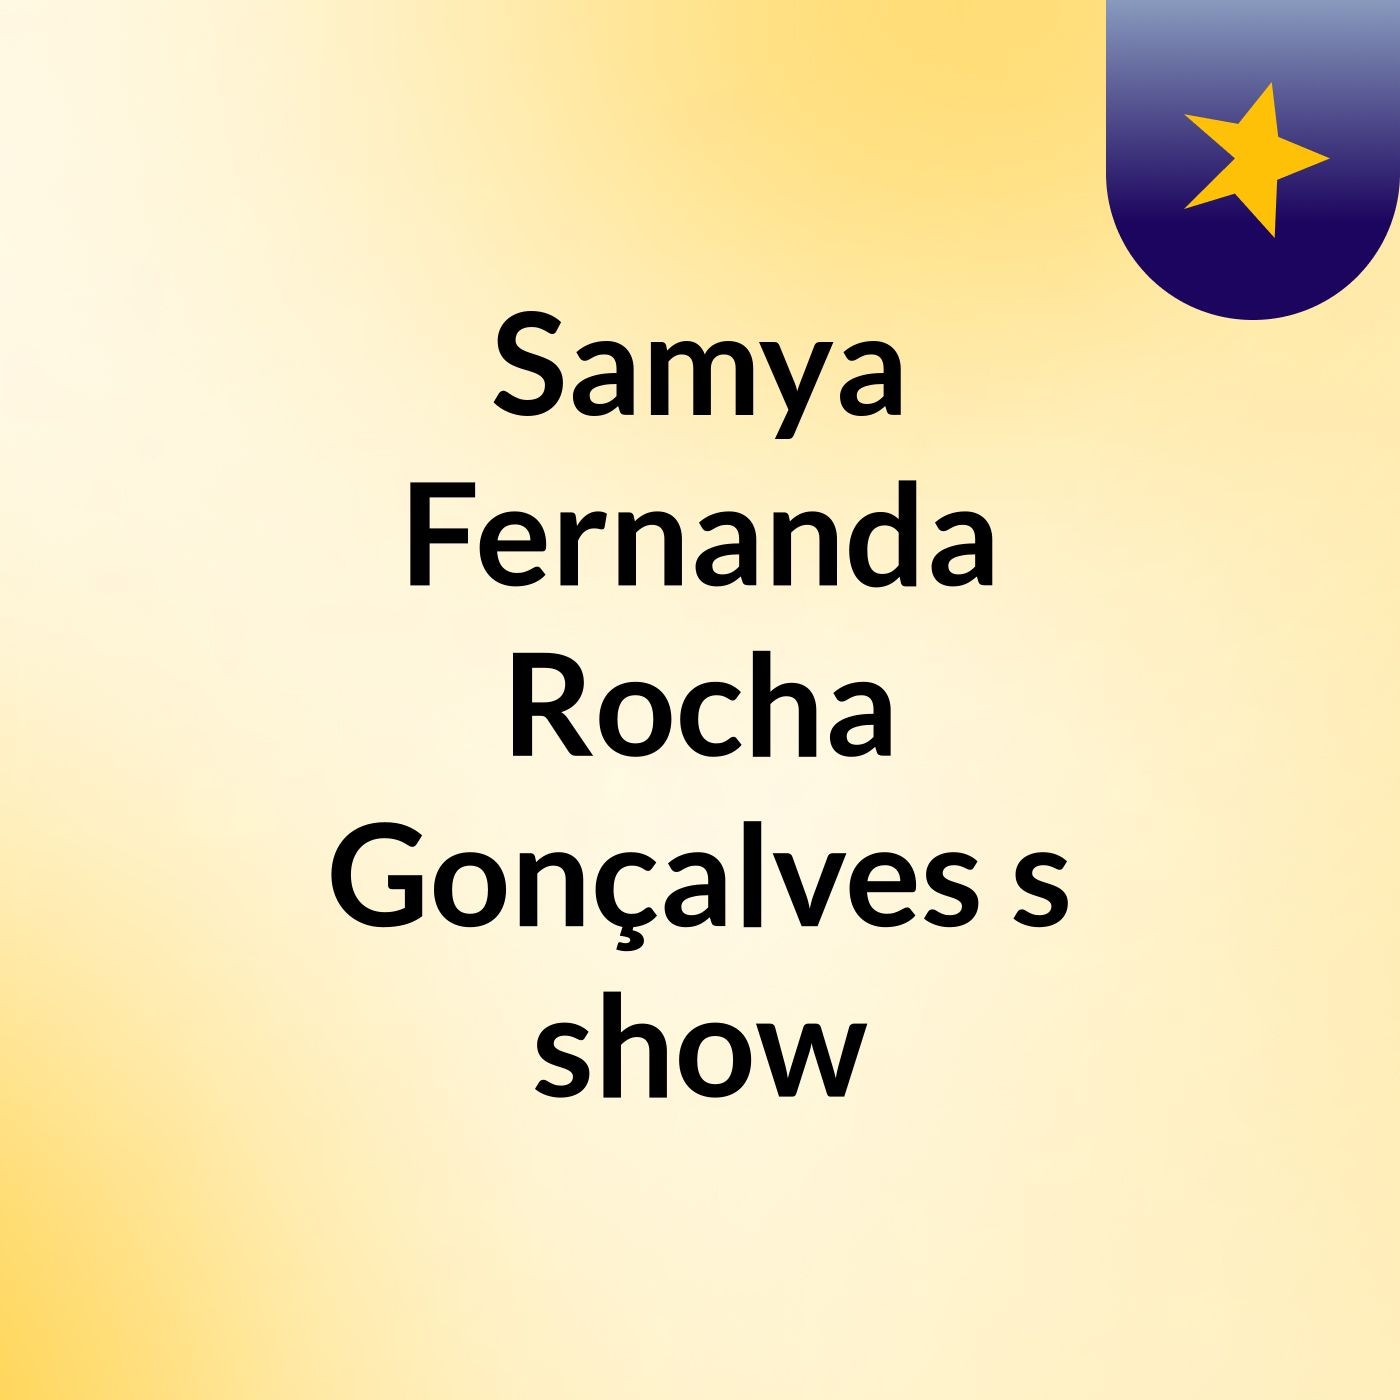 Samya Fernanda Rocha Gonçalves's show